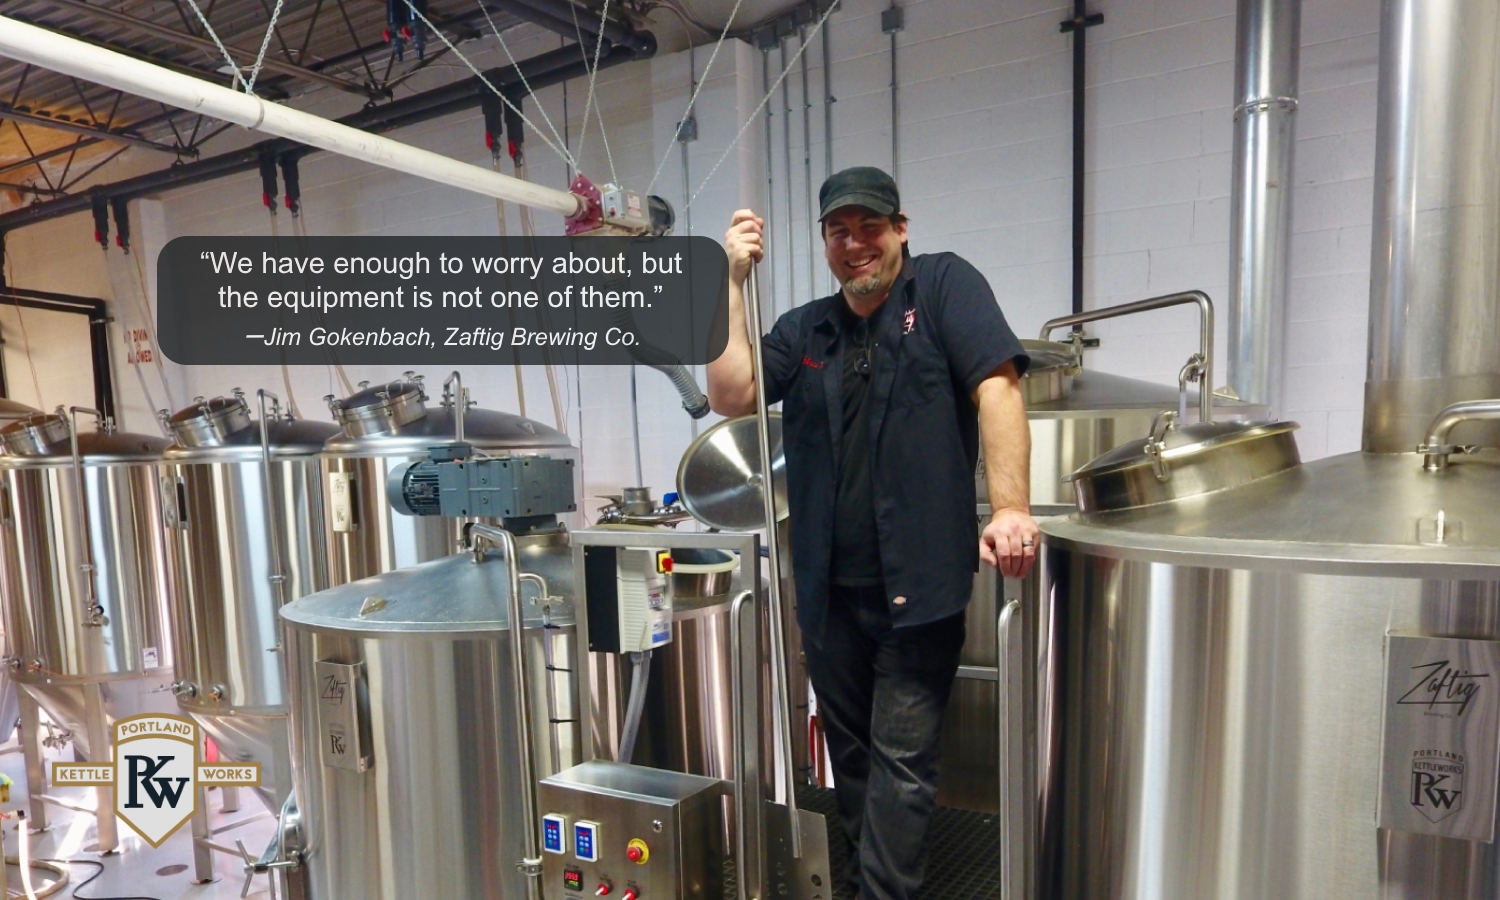 Brewing Equipment at Zaftig Brewery & Client Testimonial